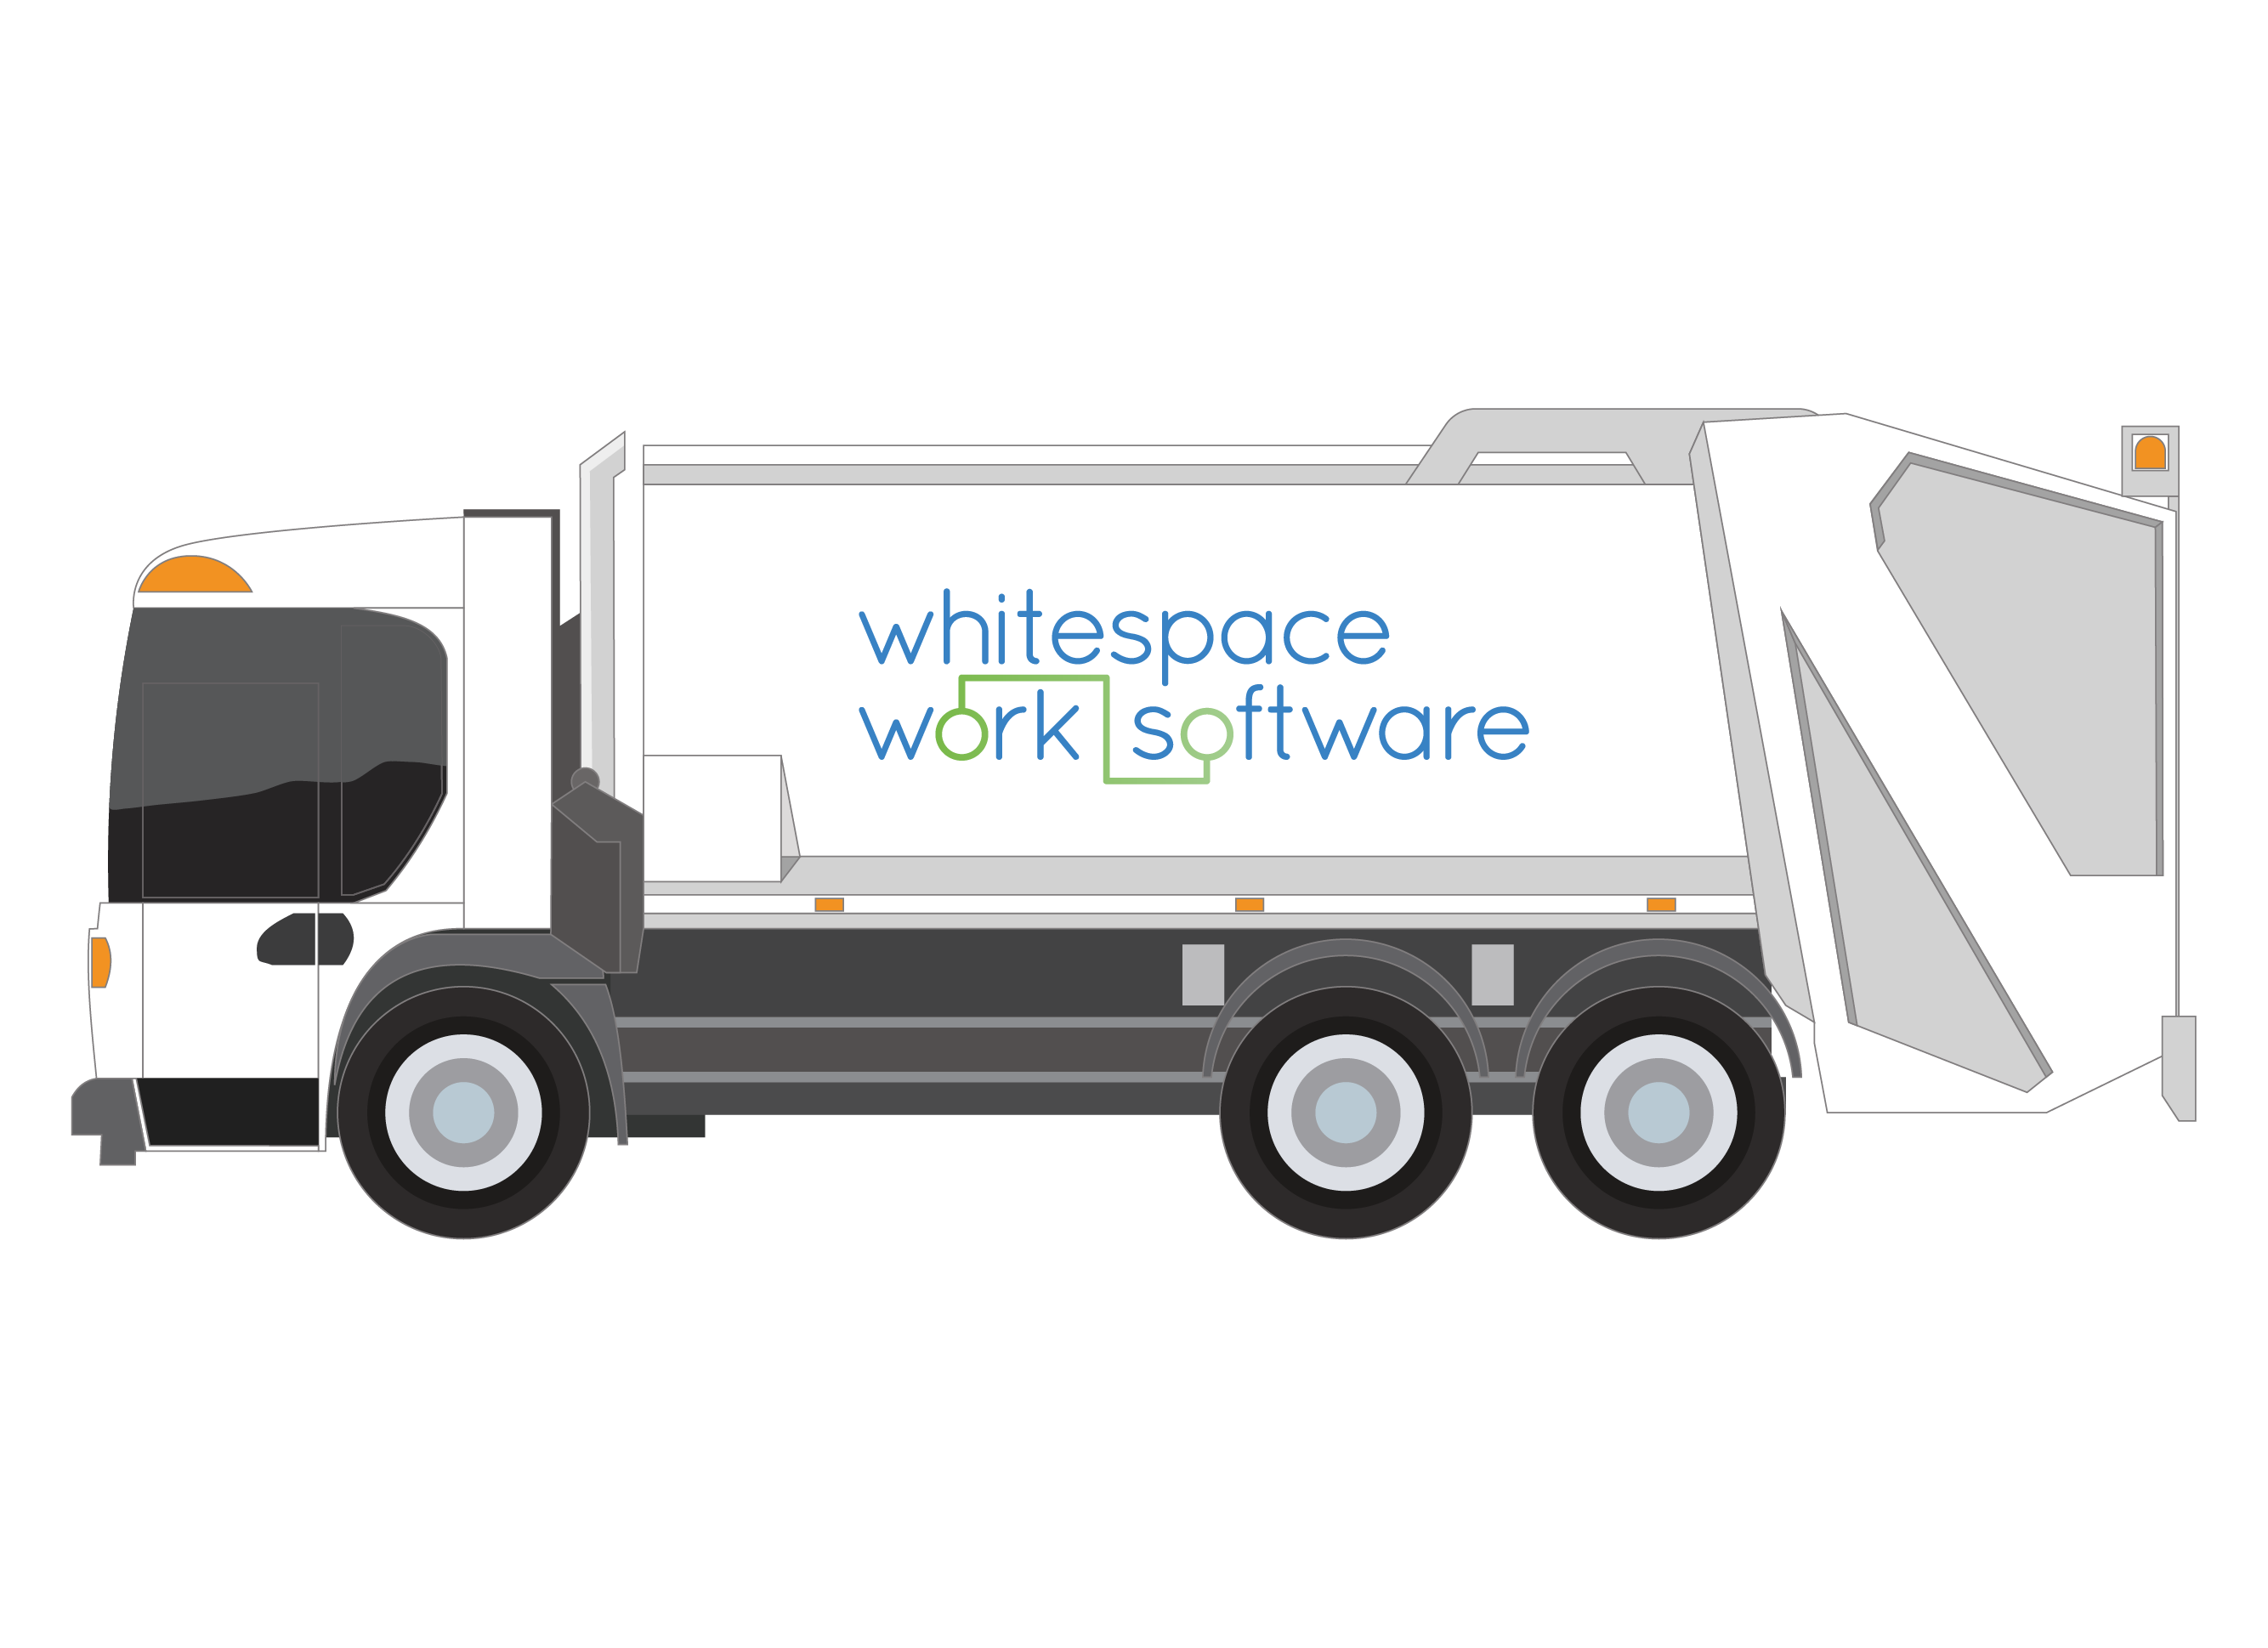 Whitespace's fleet management solution